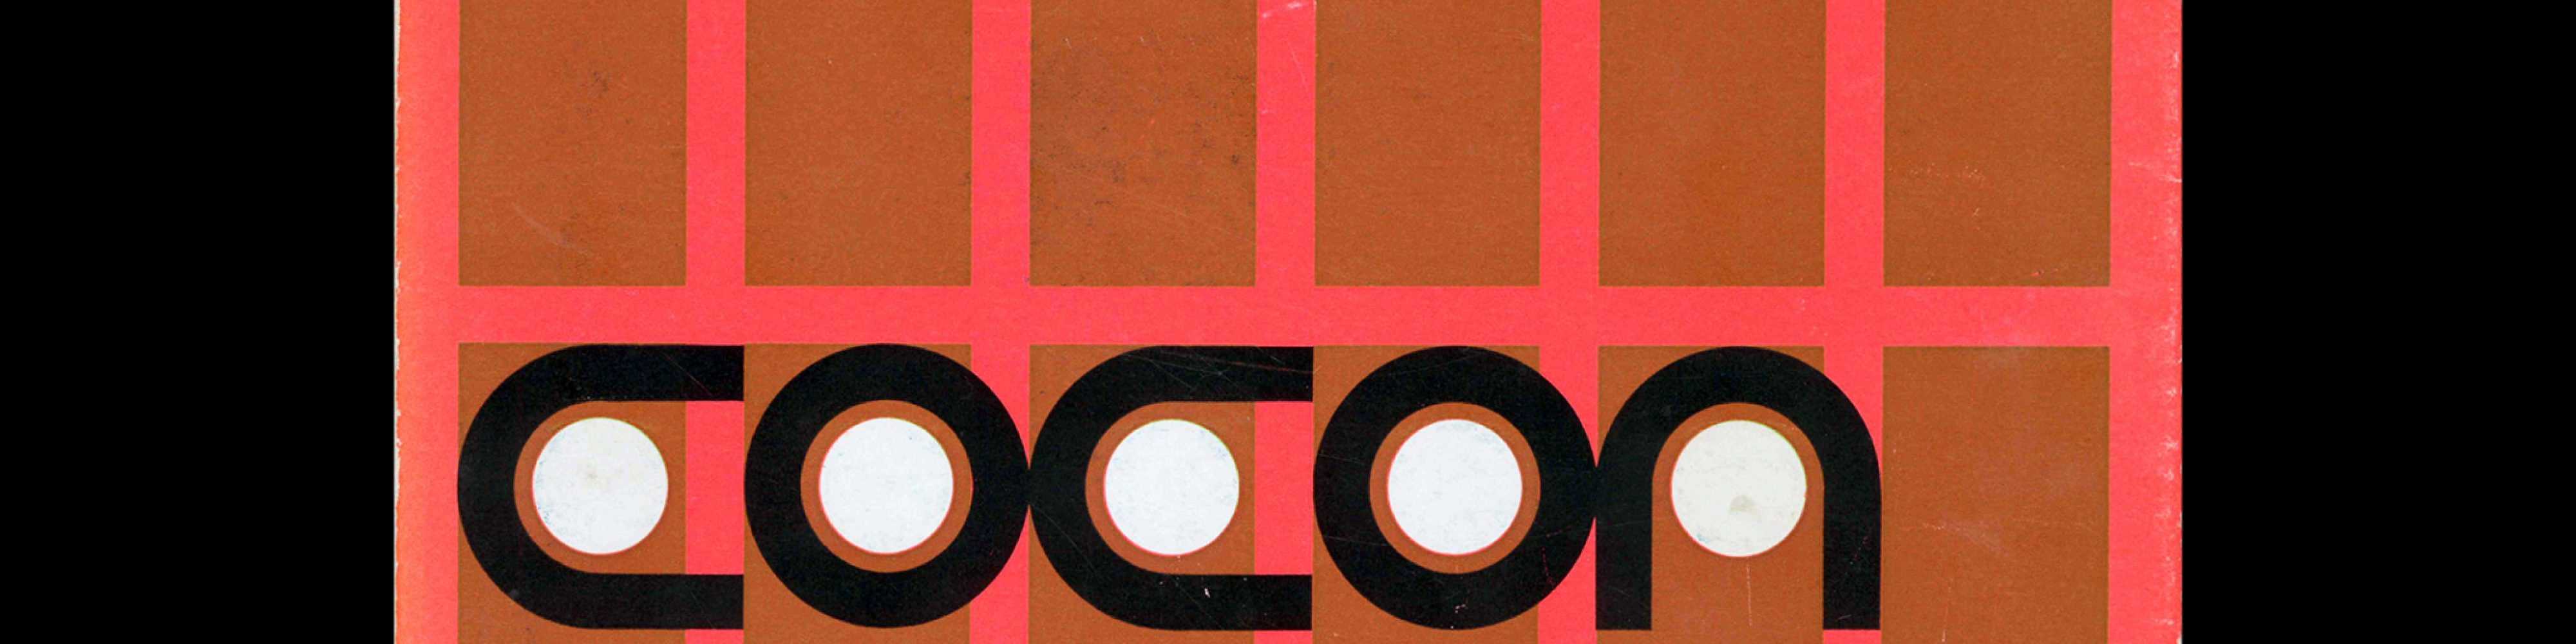 Cocon, Thomas Rap, 1967. Designed by Wim Wandel